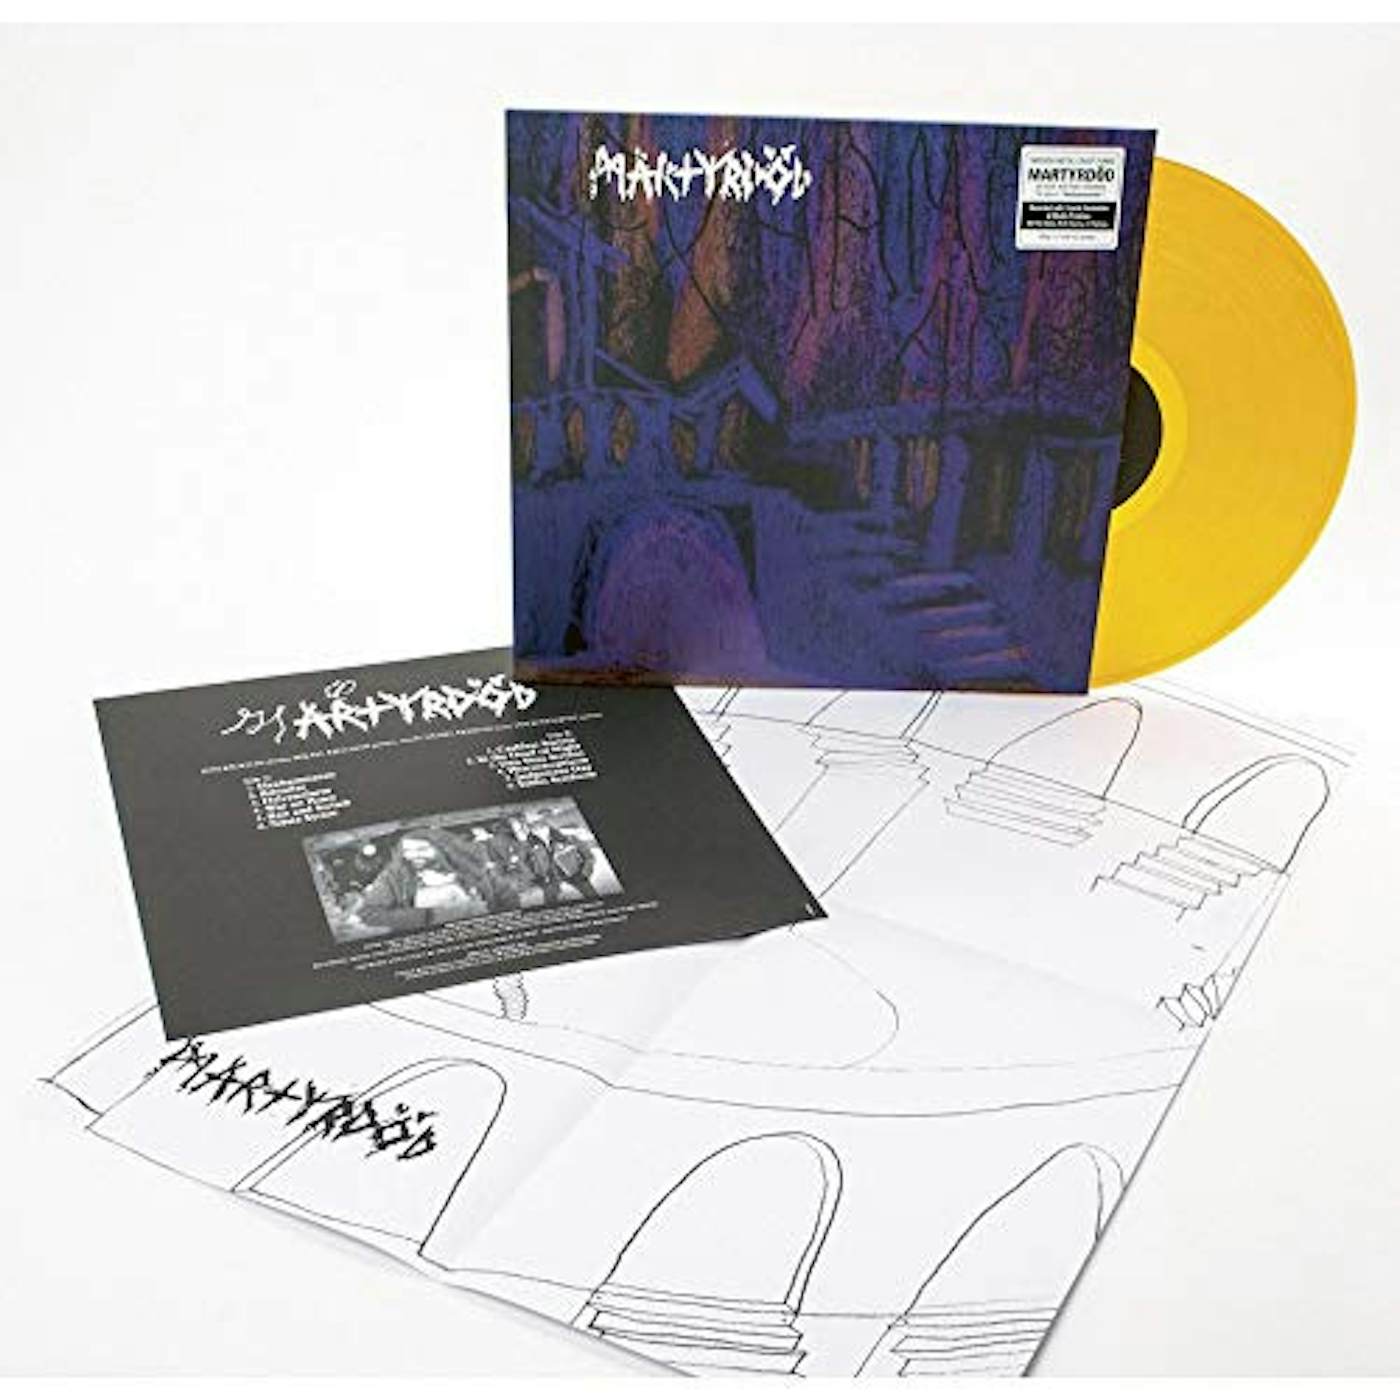 Martyrdöd - HEXHAMMAREN Vinyl Record